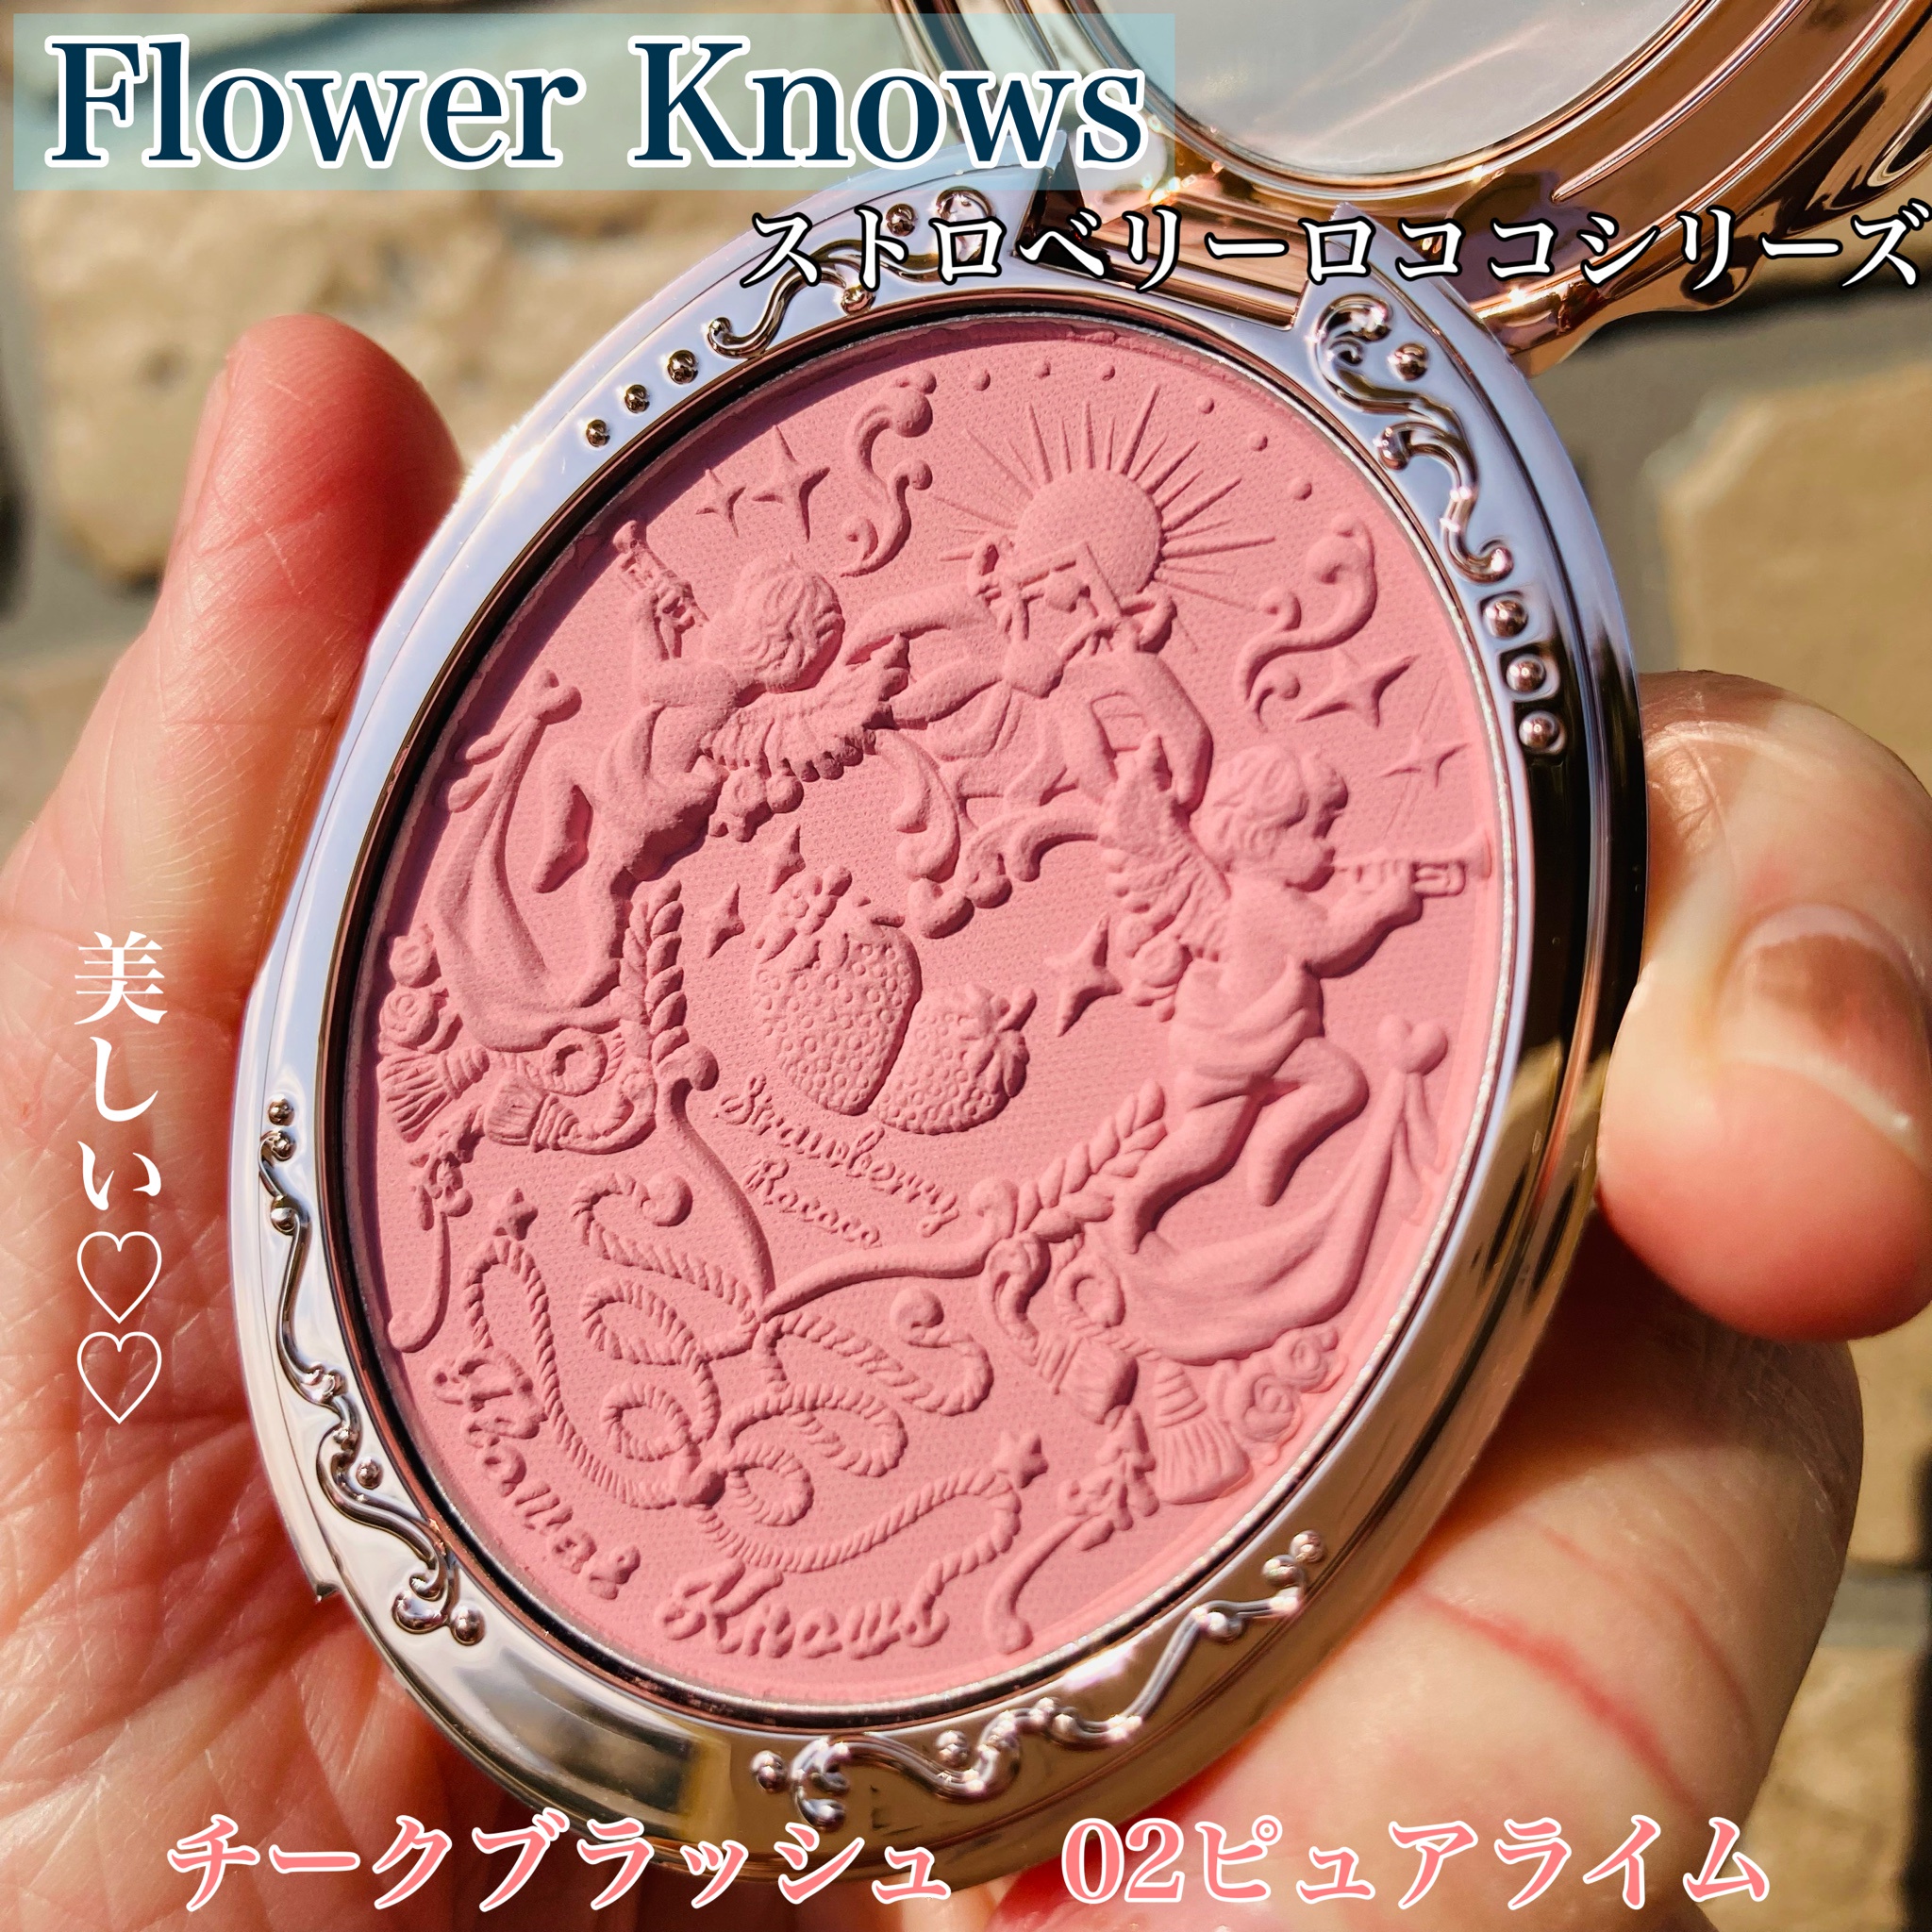 FlowerKnowsフラワーノーズ / フラワーノーズ ストロベリーロココ